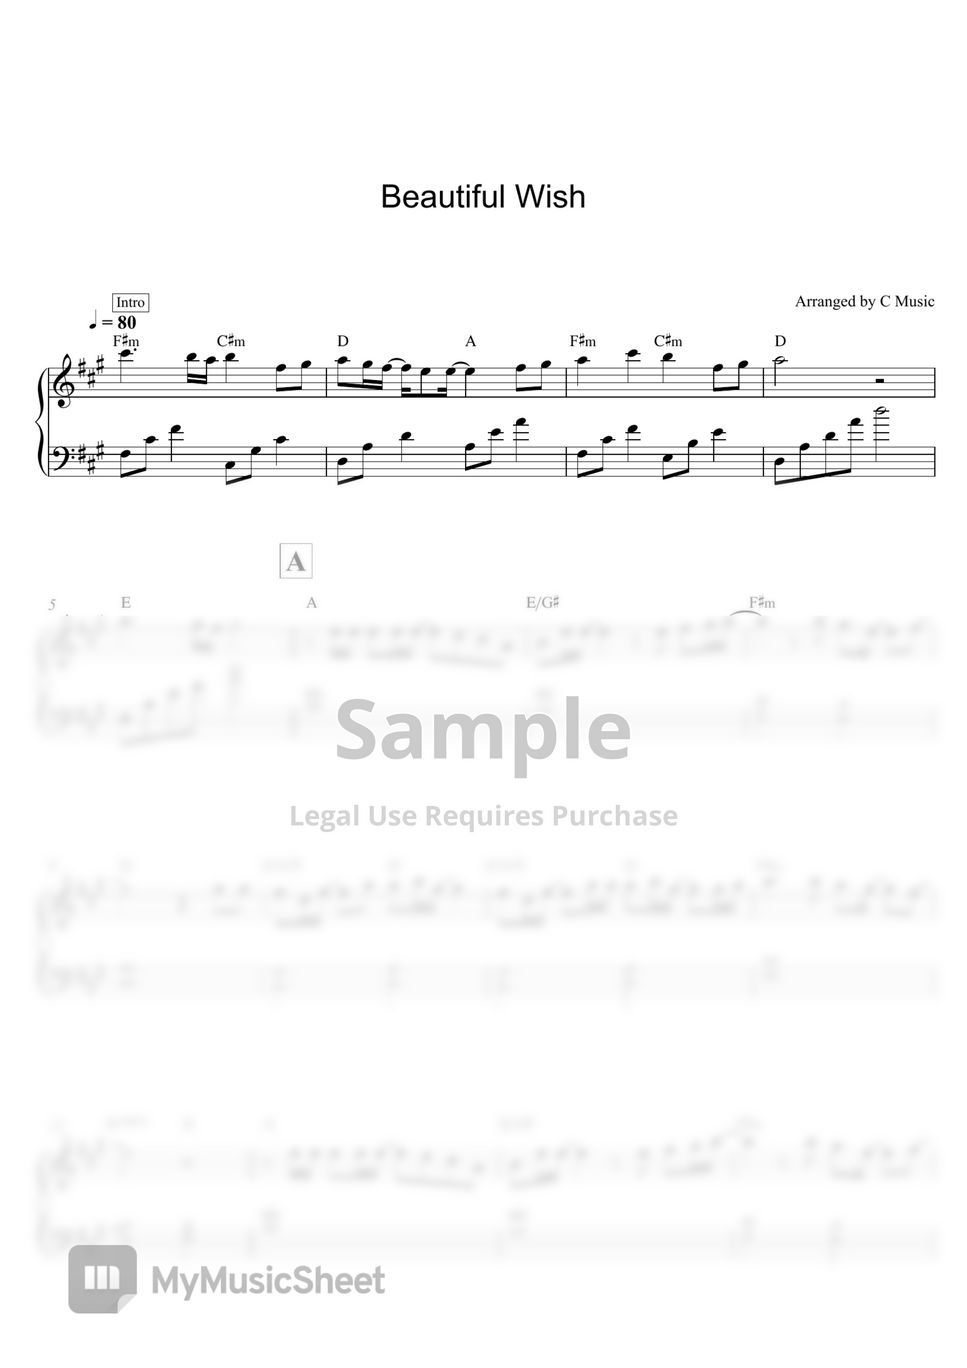 Mermaid Melody - Beautiful Wish (Easy Version) by C Piano